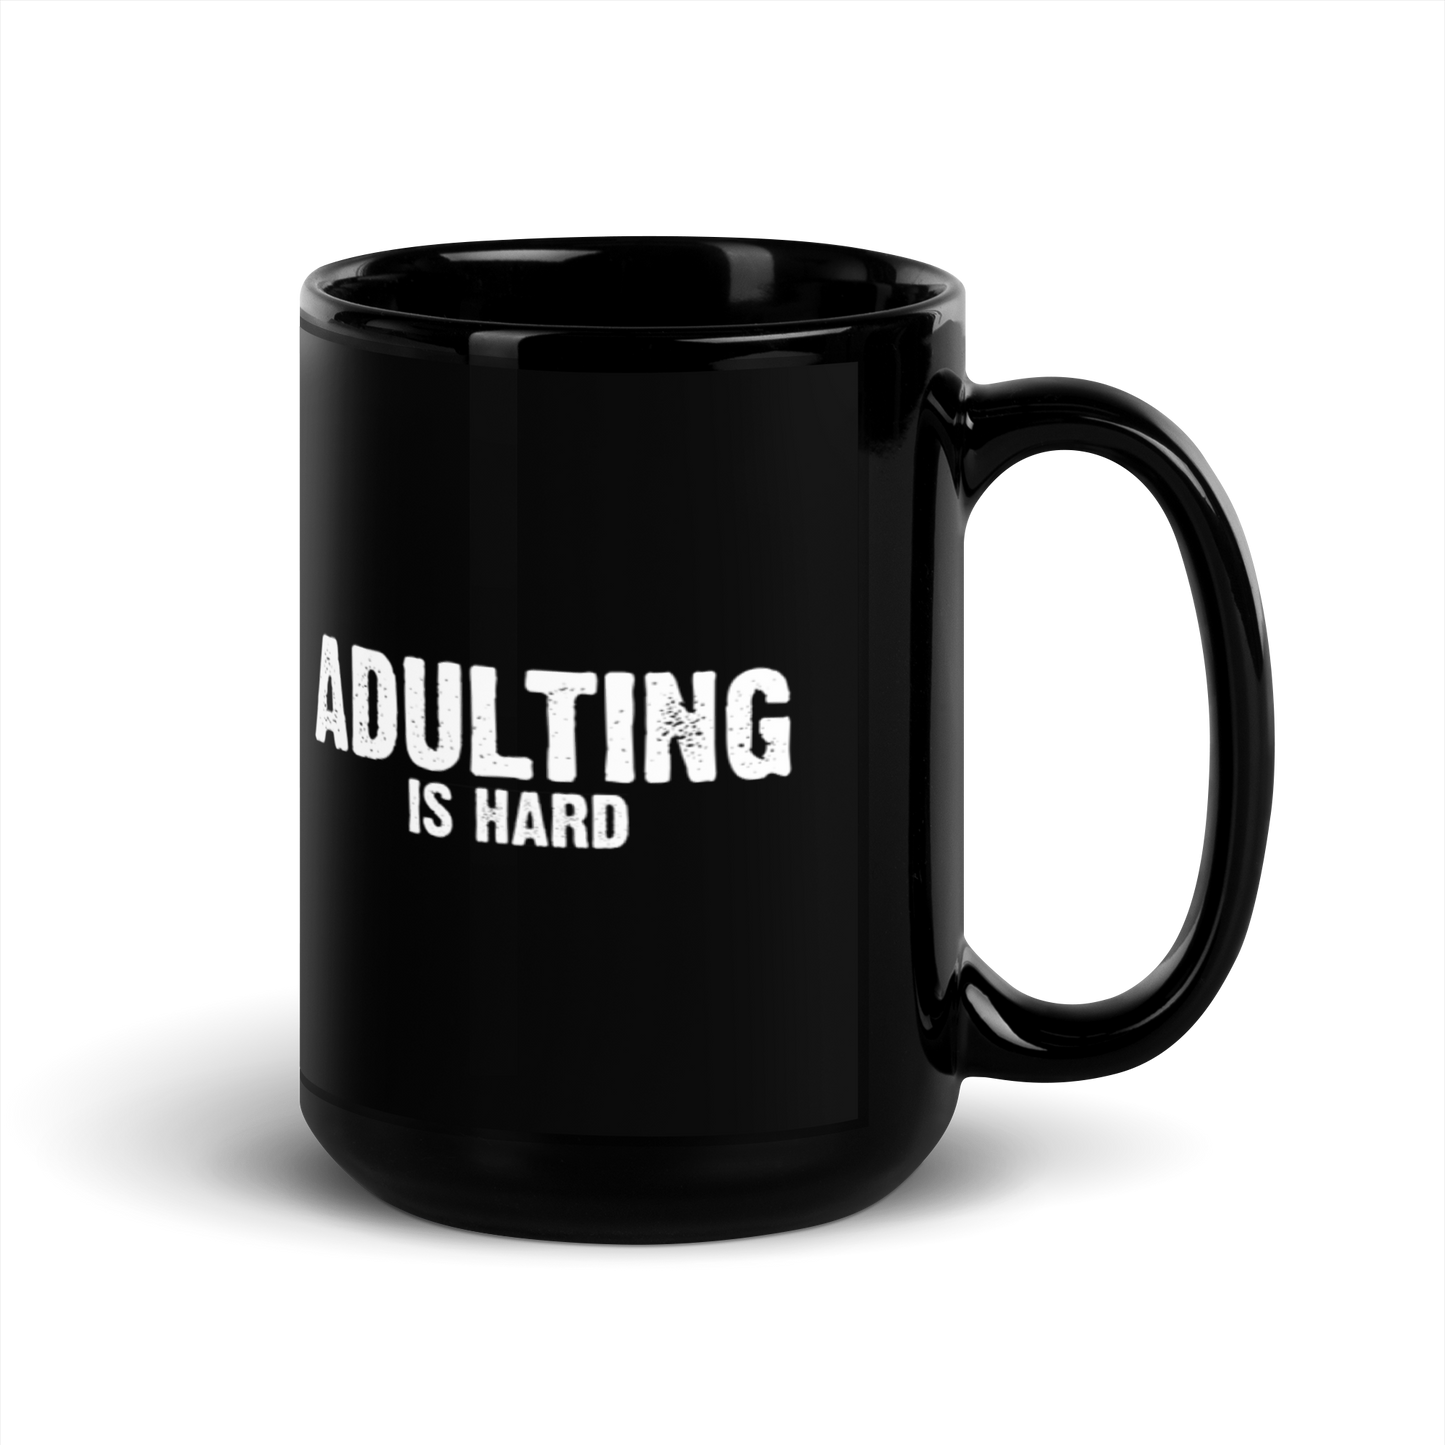 Adulting Is Hard - Funny Mug